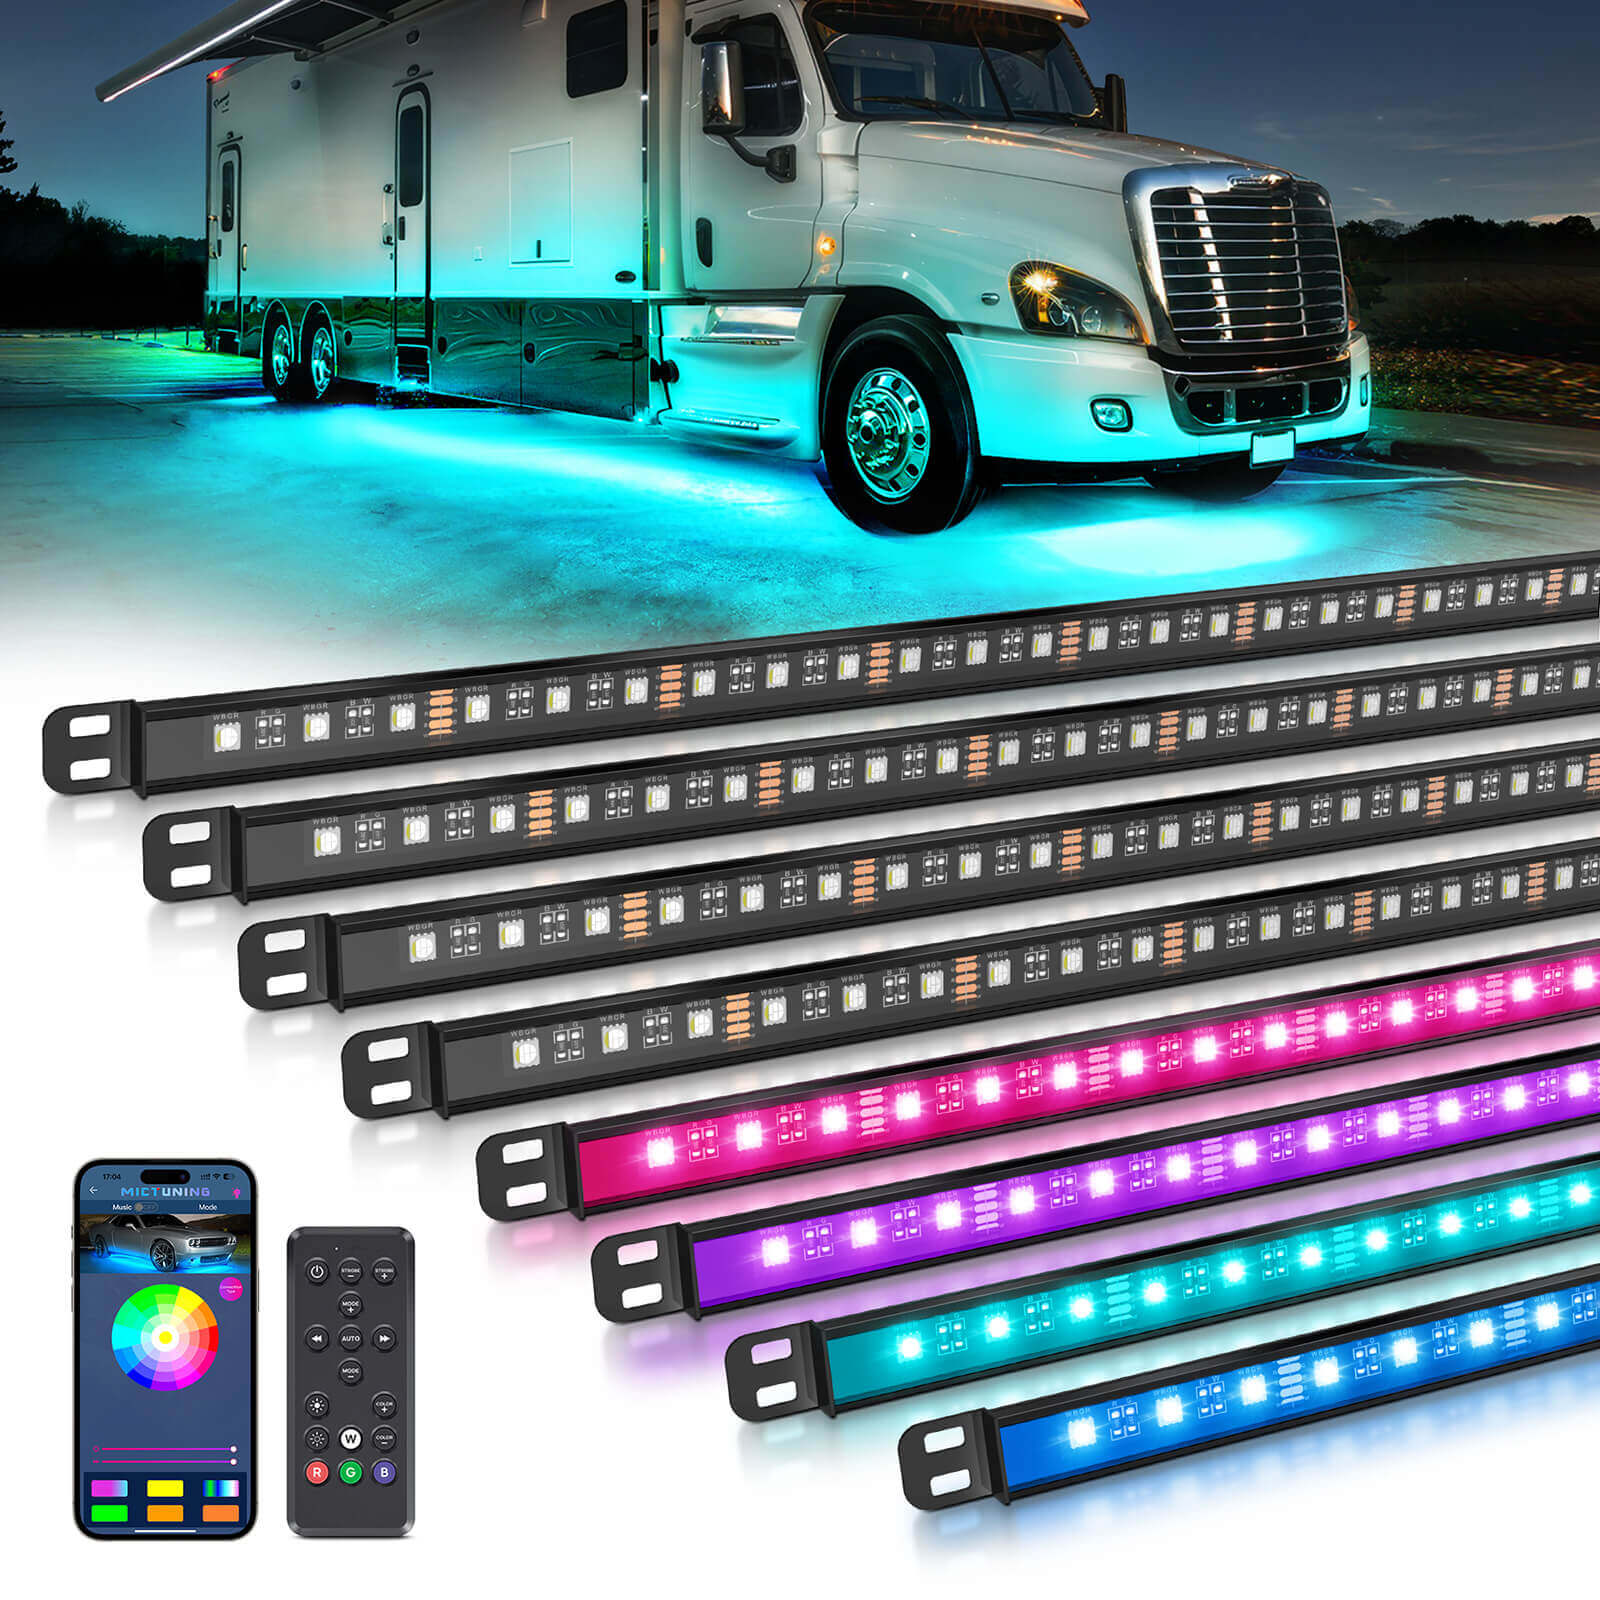 N8 RGBW Underglow Light Bars(RV Version), App/Remote Control, w/ 2pcs 11.4ft Extension Cords